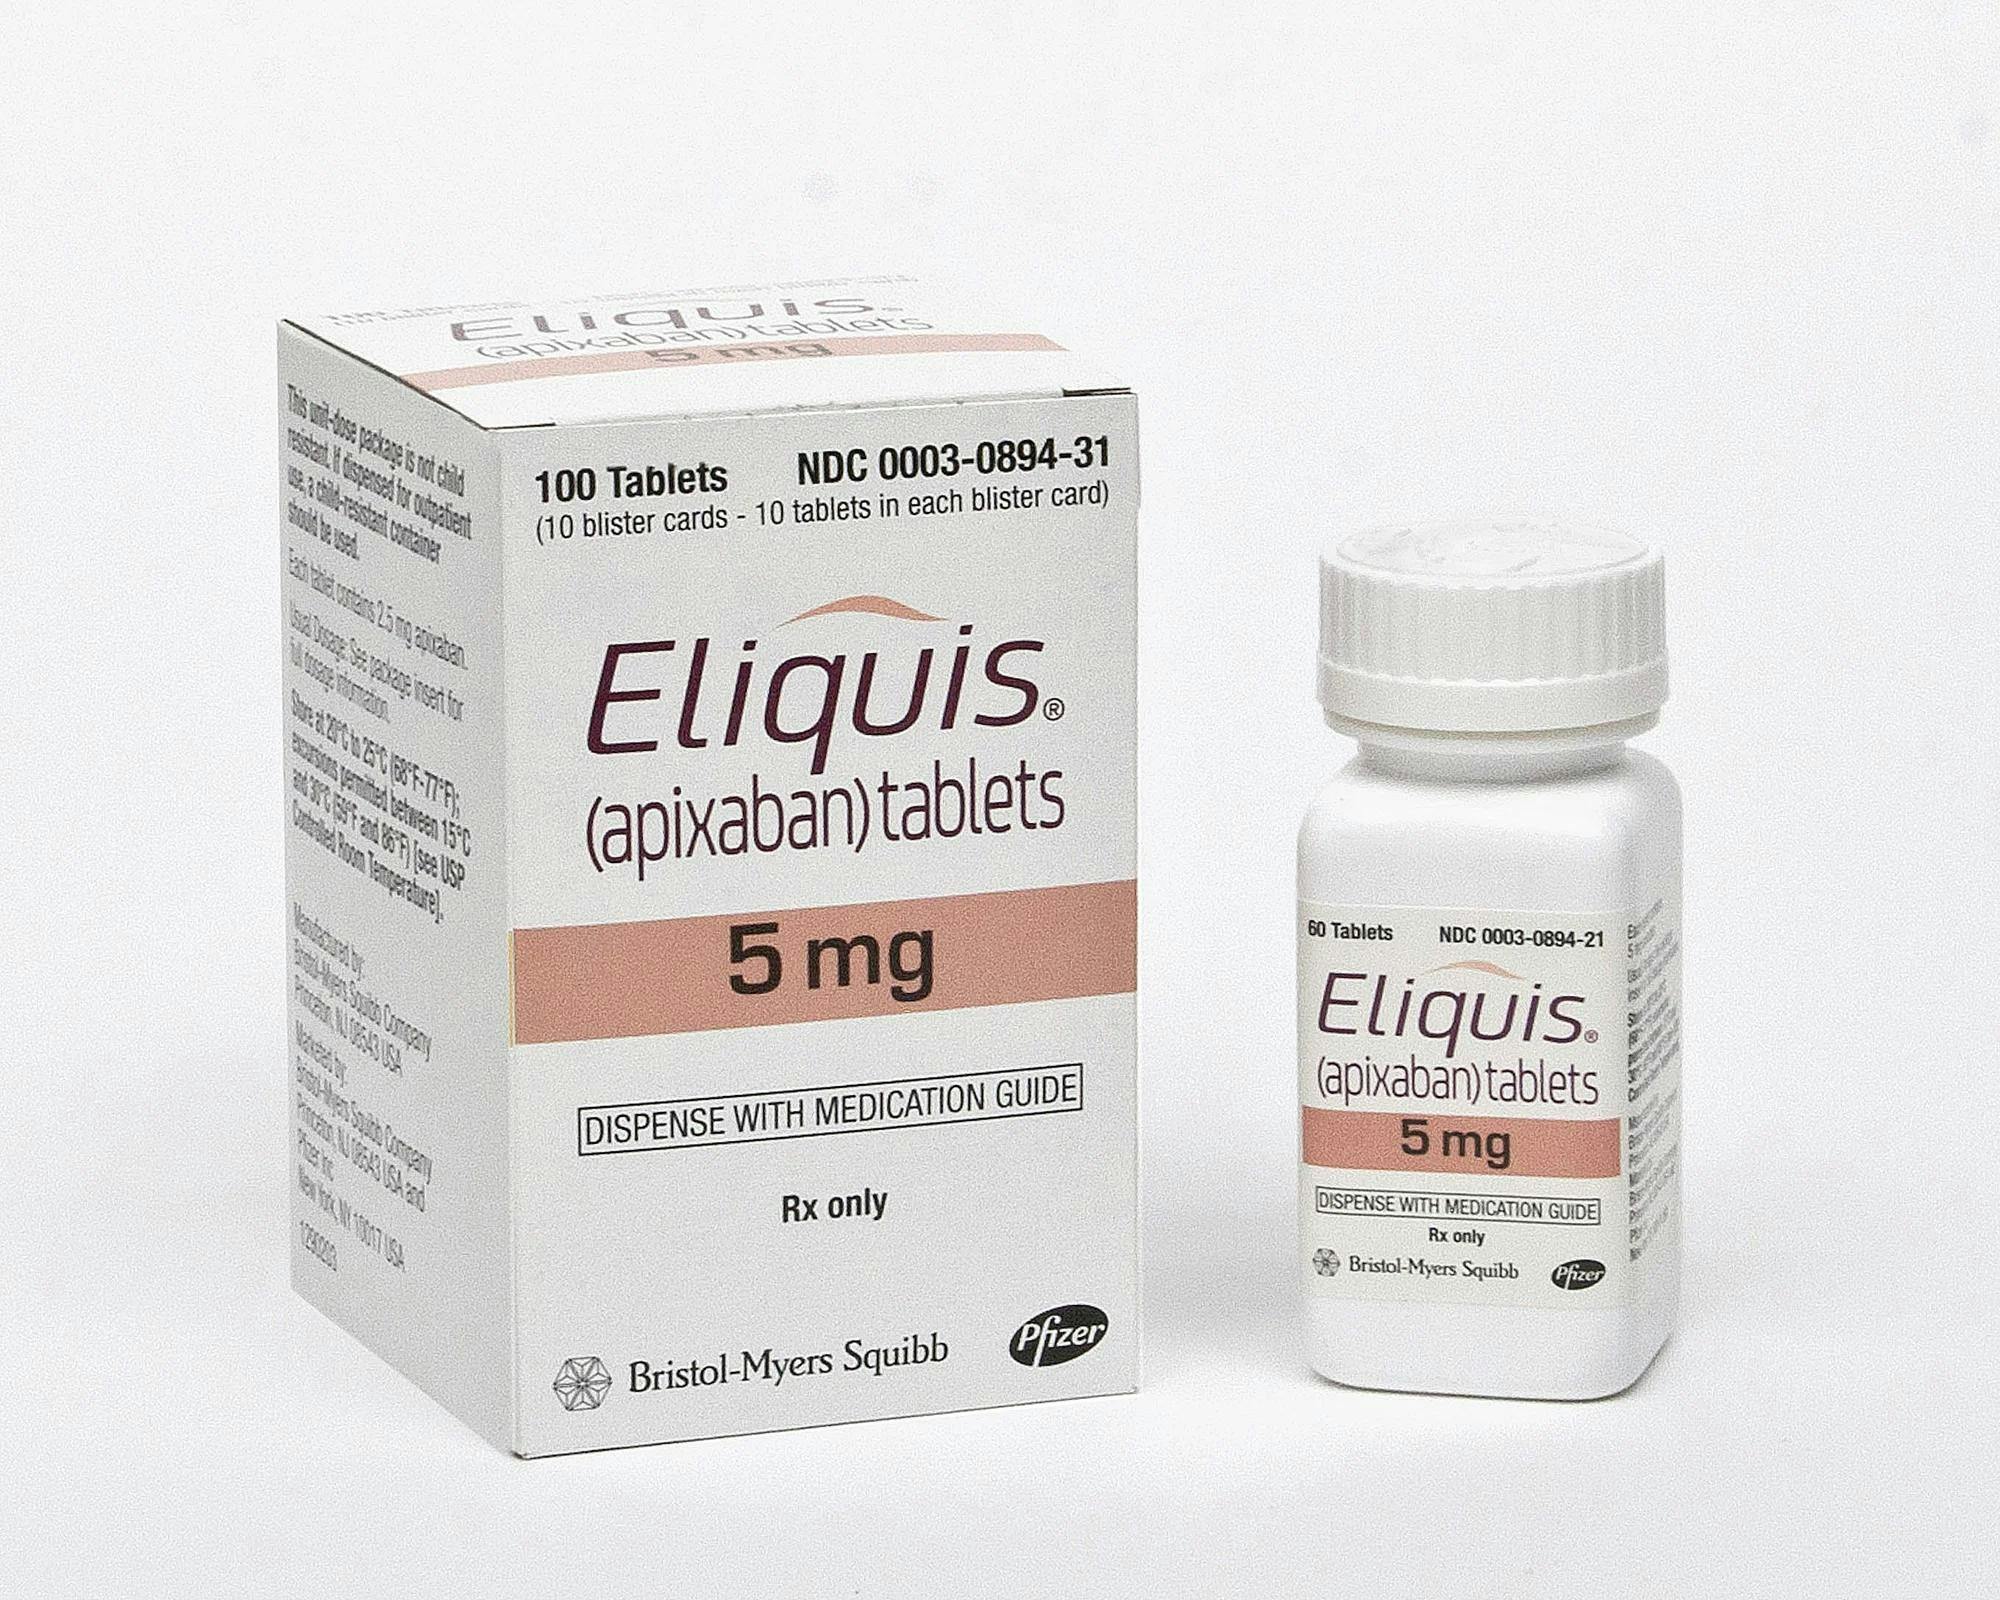 Eliquis packaging | Image credit: Pfizer 